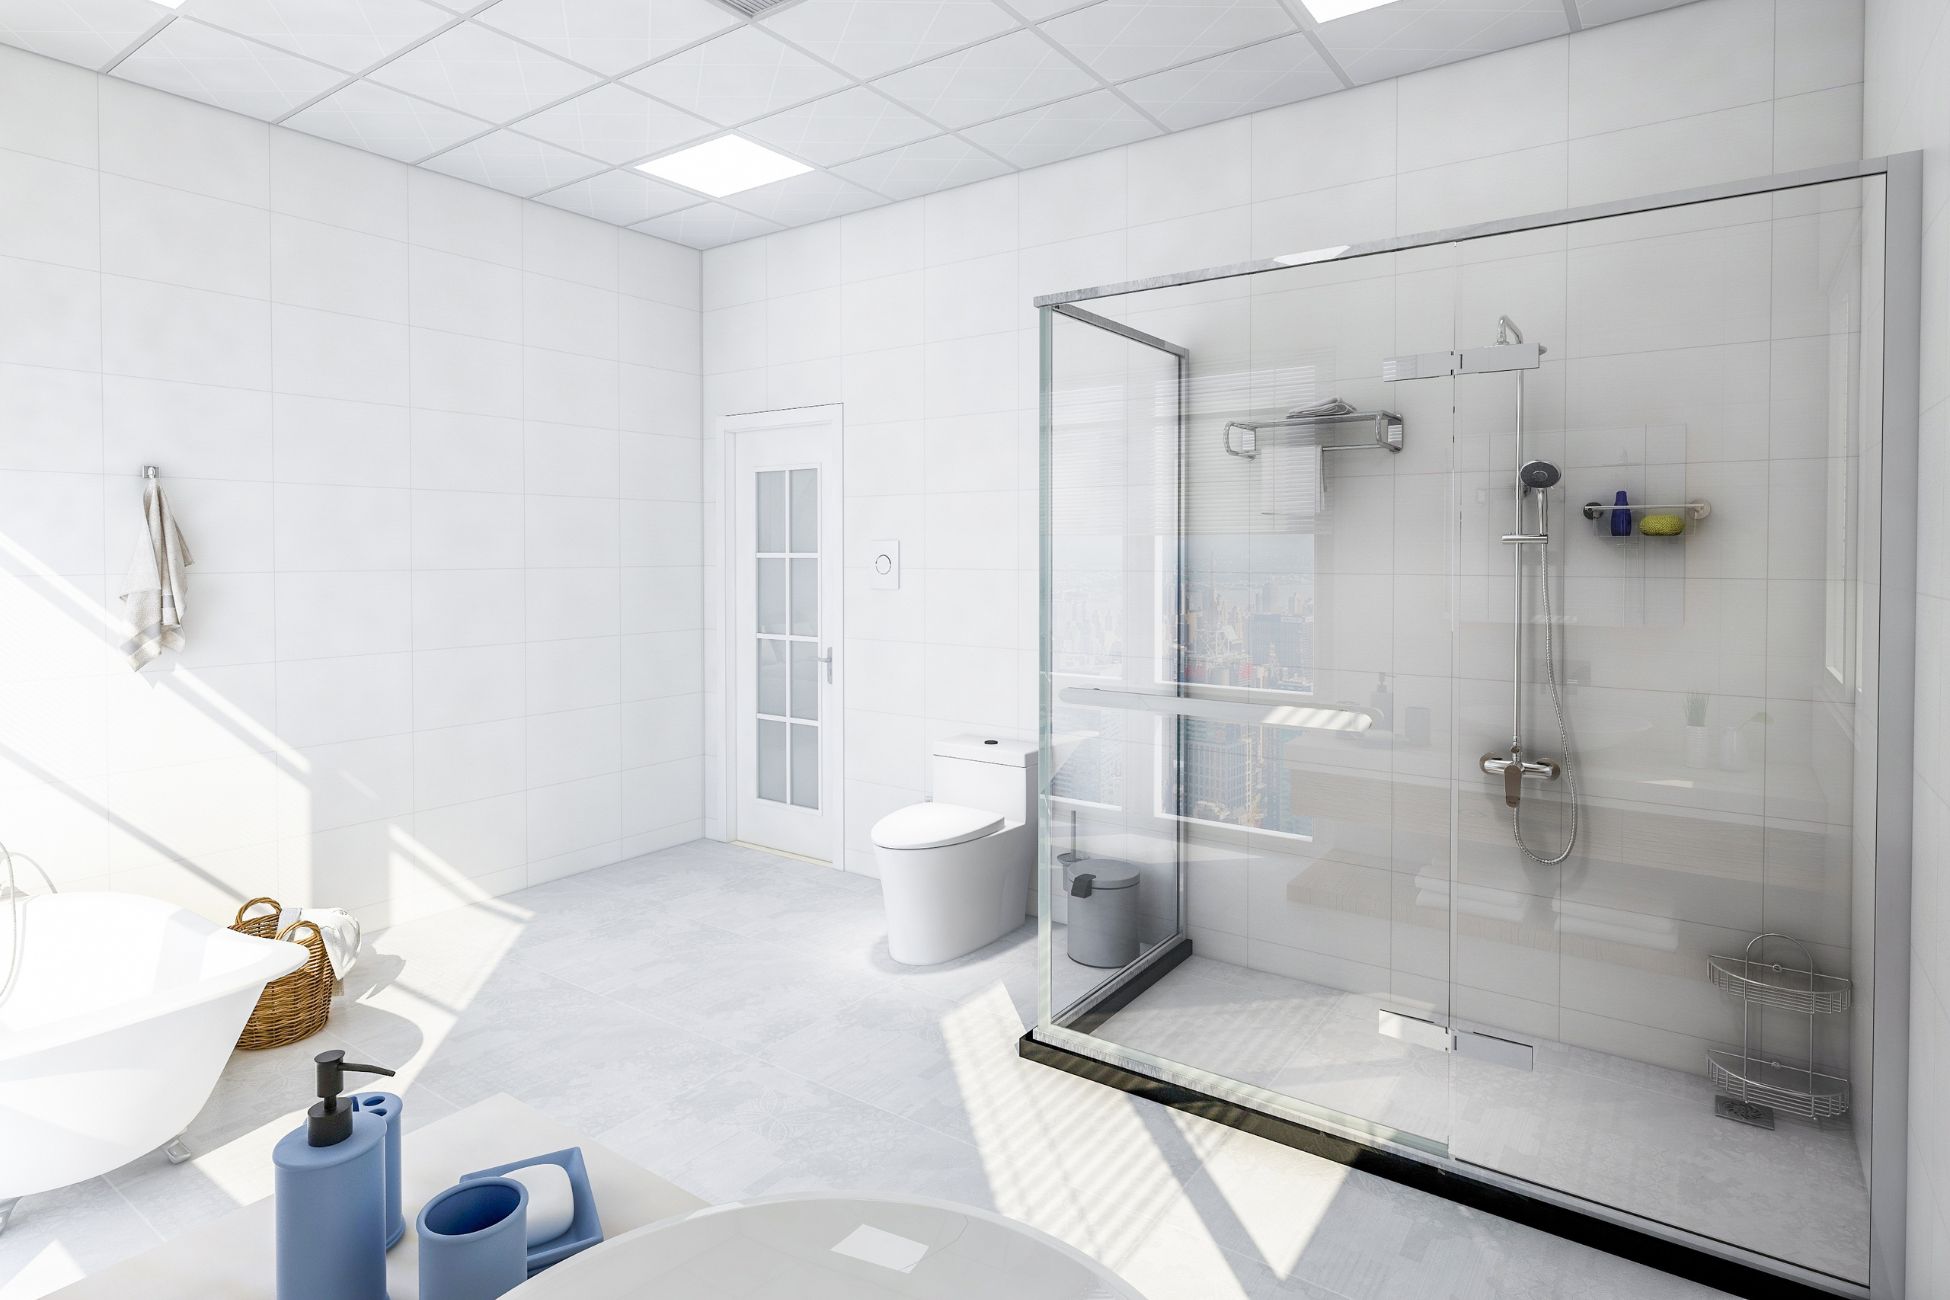 Spacious White bathroom with corner enclosure shower